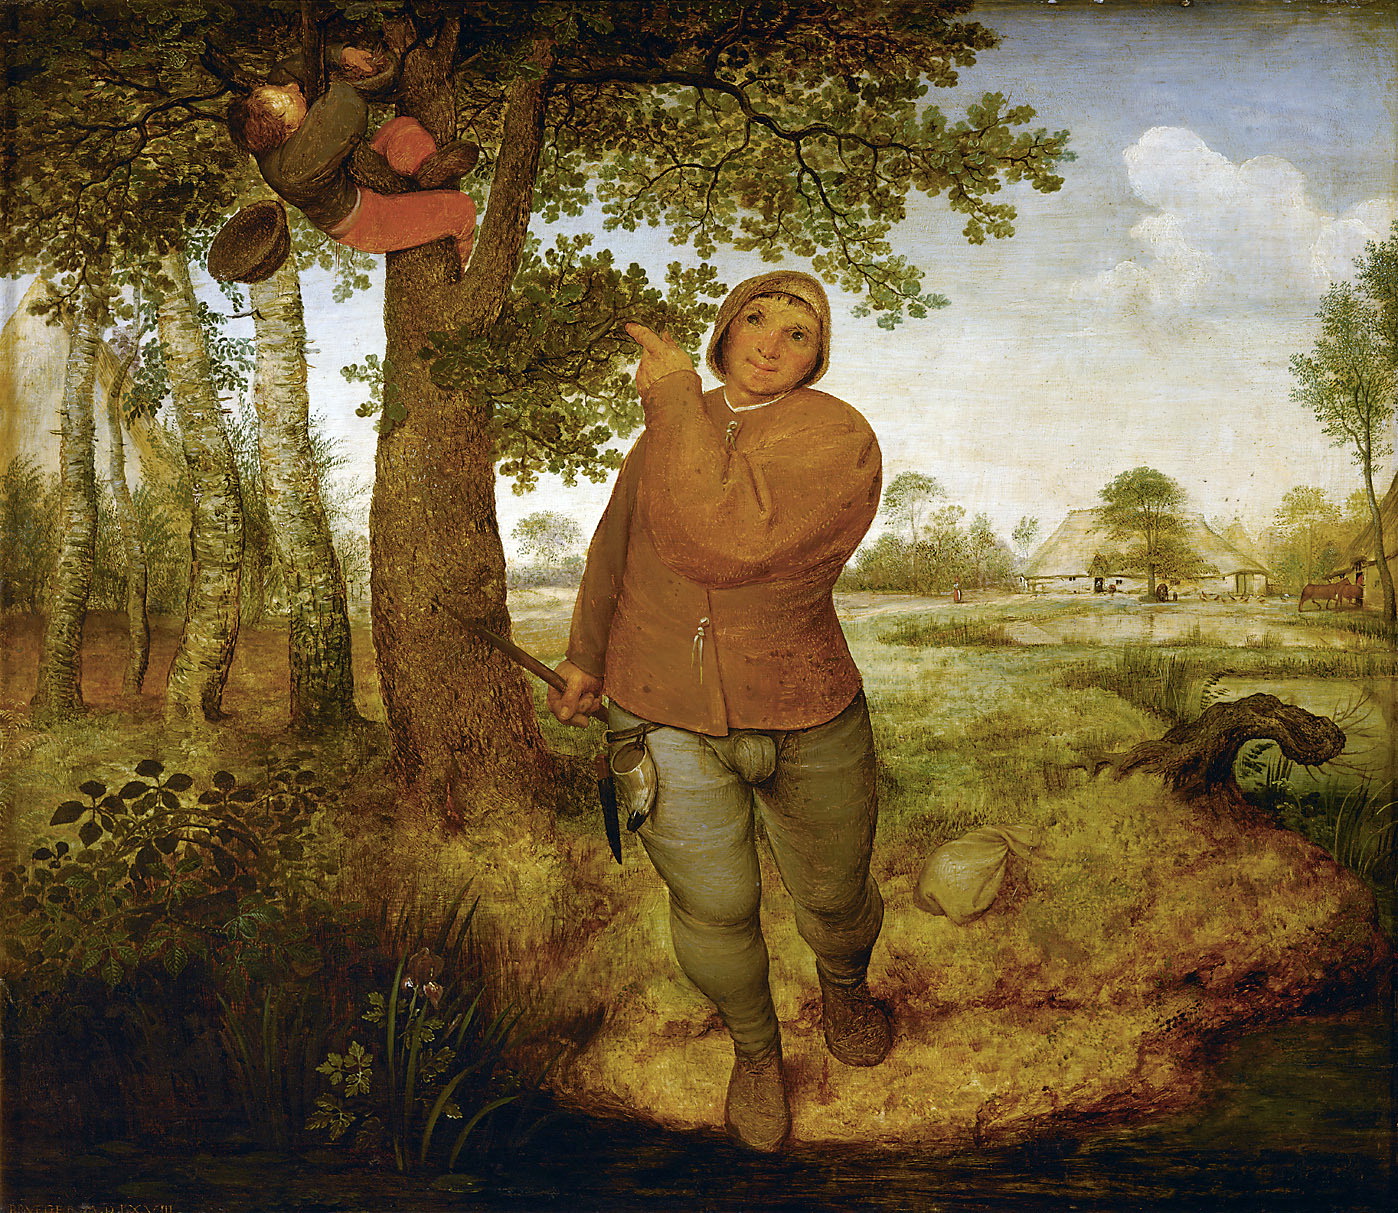 Pieter+Brueghel+the+Elder-1525-1569 (2).jpg